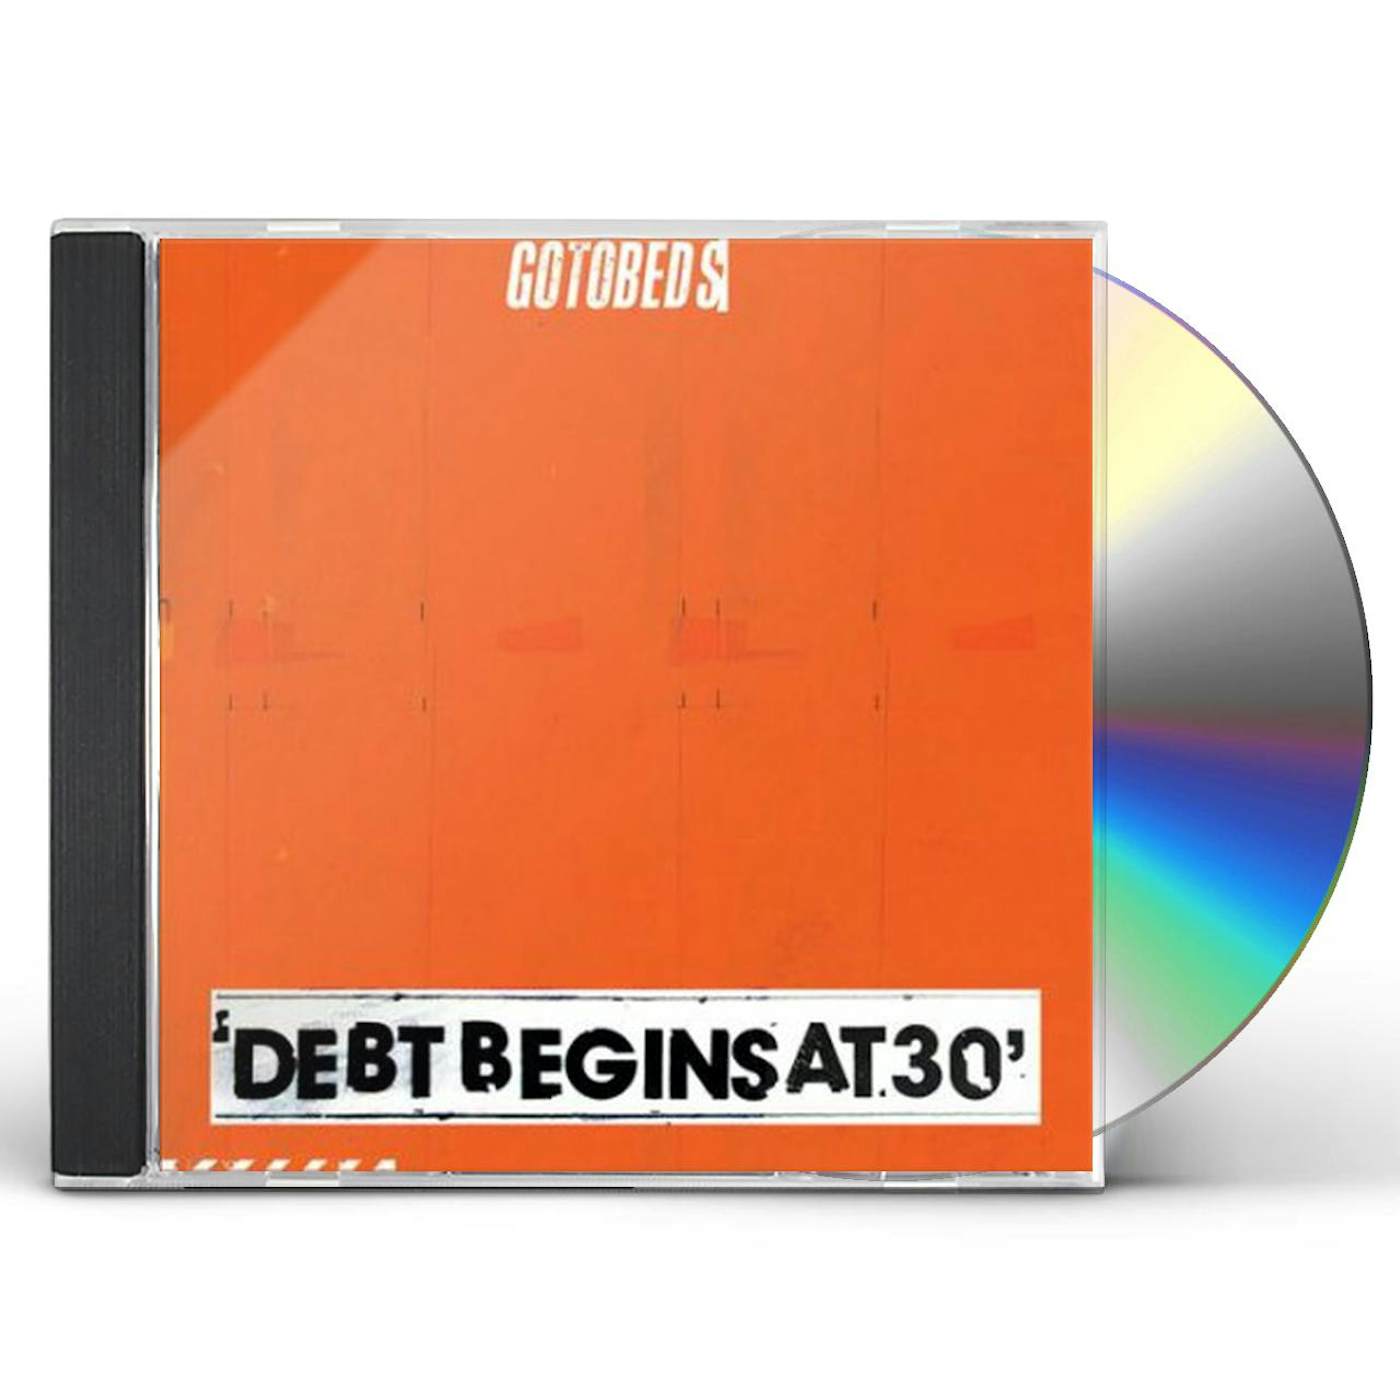 The Gotobeds Debt Begins At 30 CD